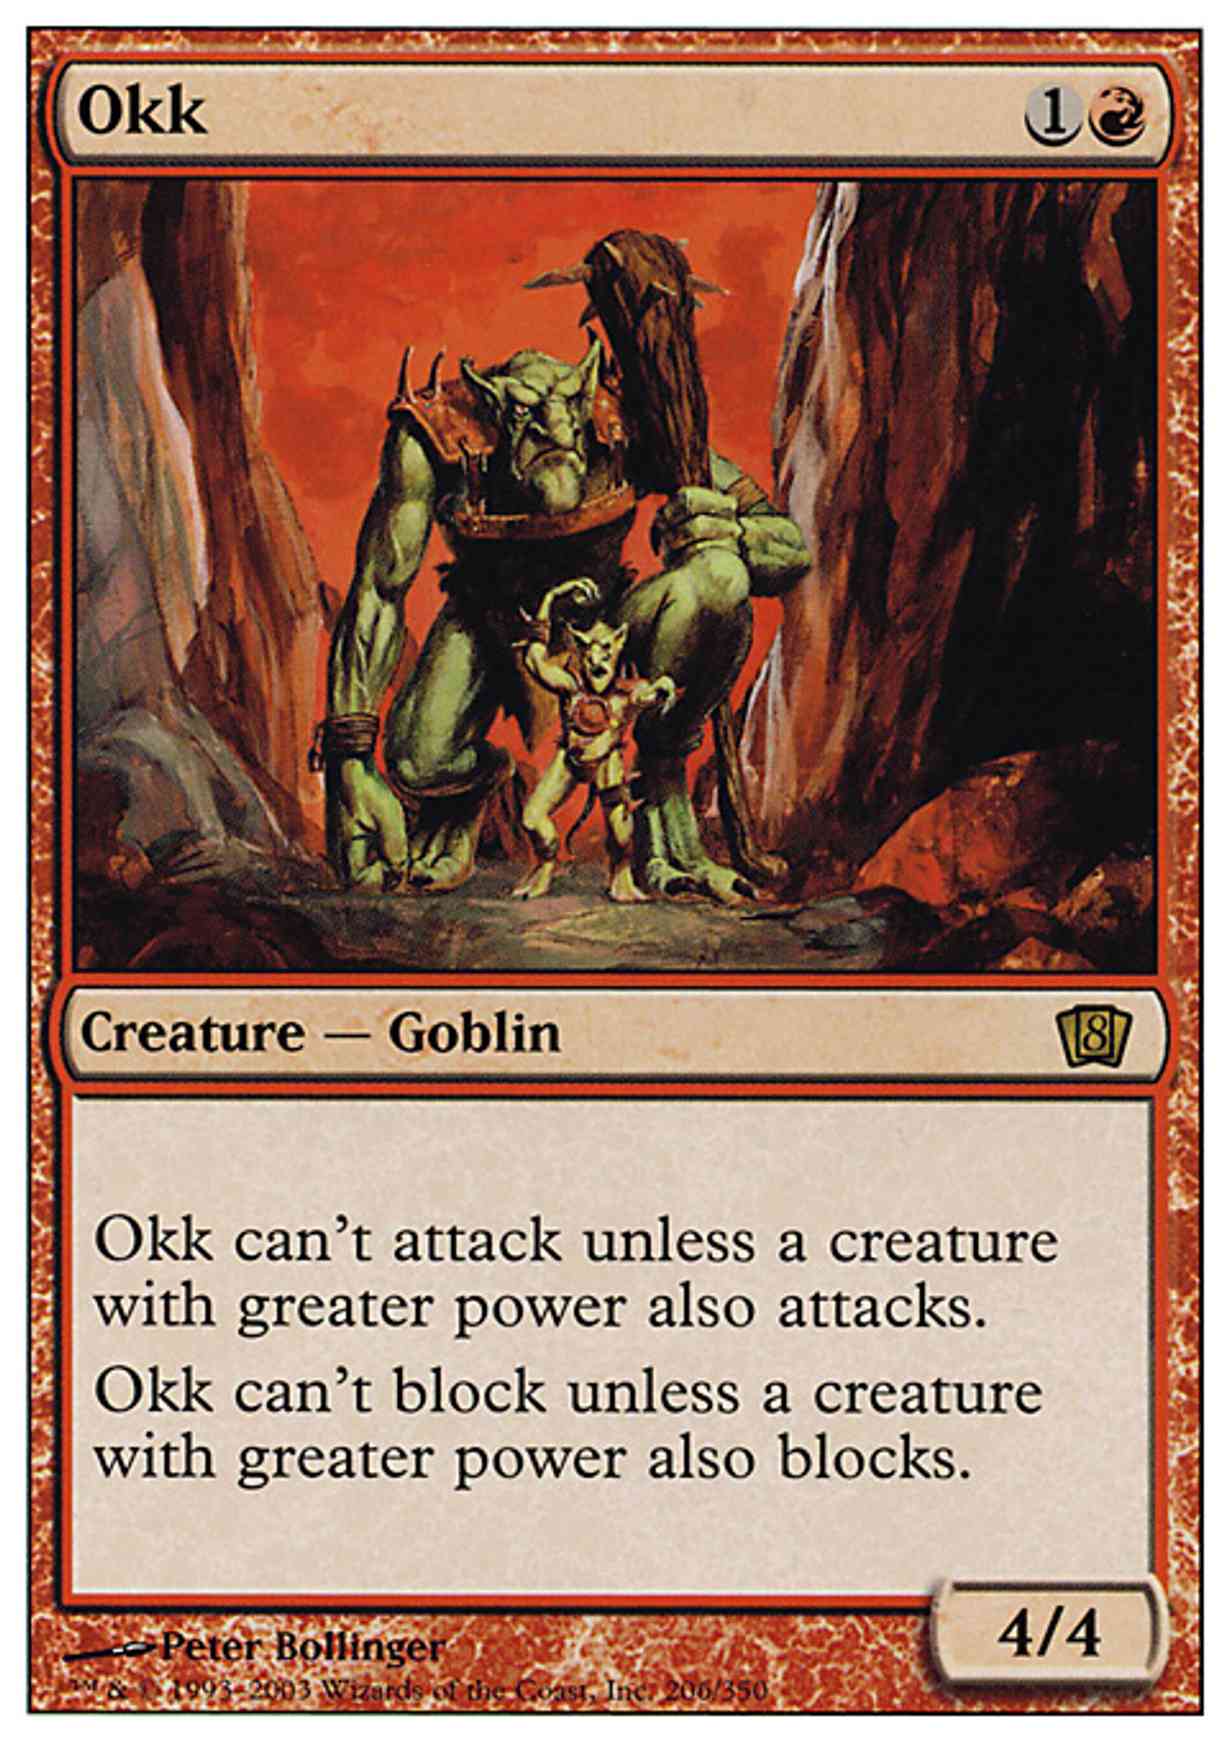 Okk magic card front